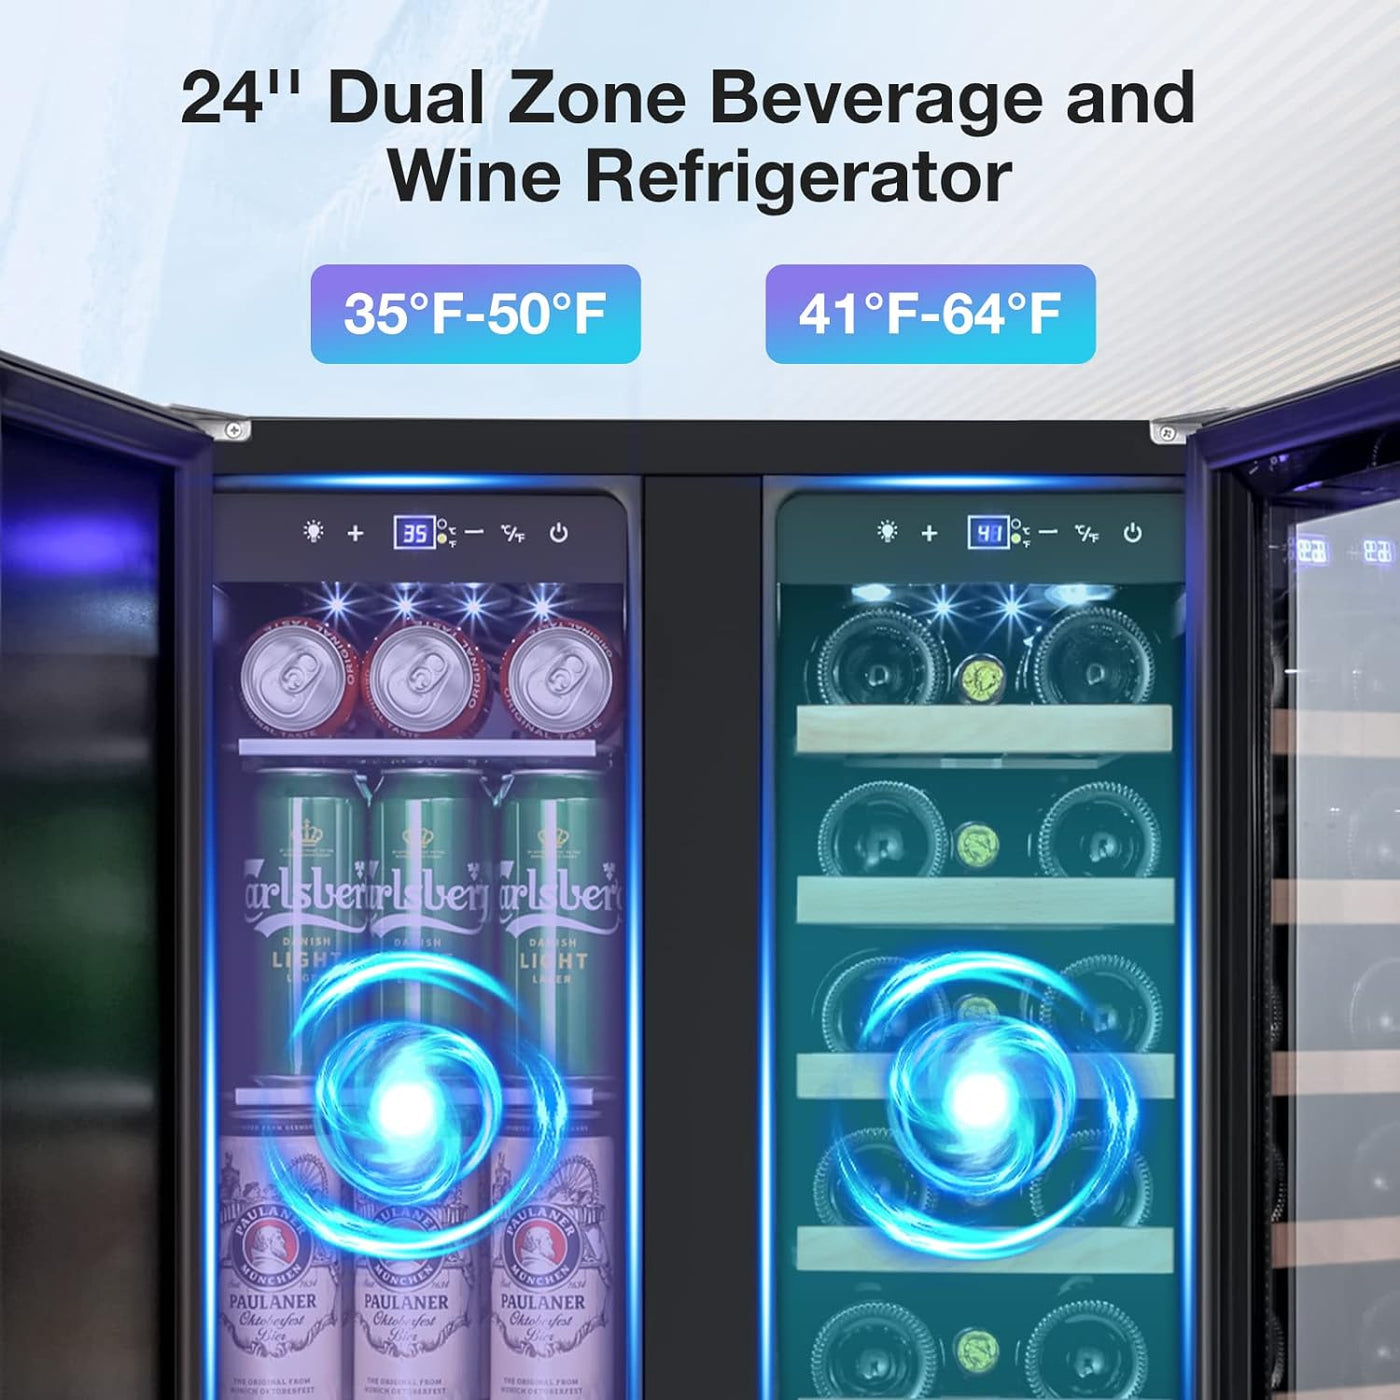 Tylza Wine and Beverage Refrigerator, 24 inch Dual Zone Wine Beverage Cooler - $430